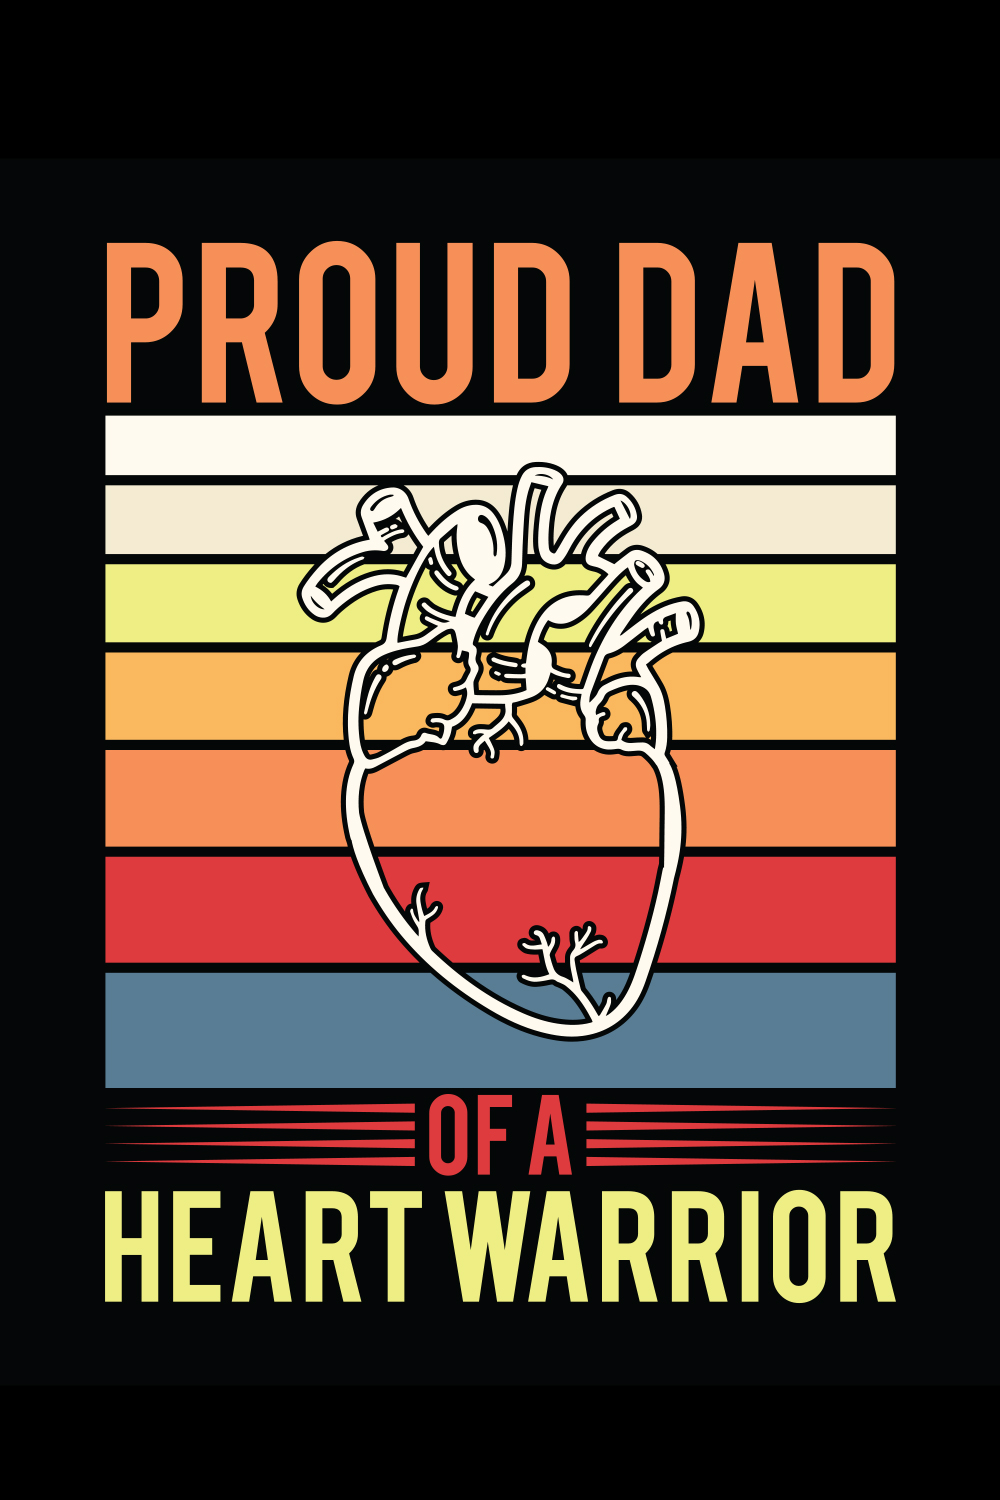 Proud Dad Of A Heart Warrior T-shirt Design pinterest image.